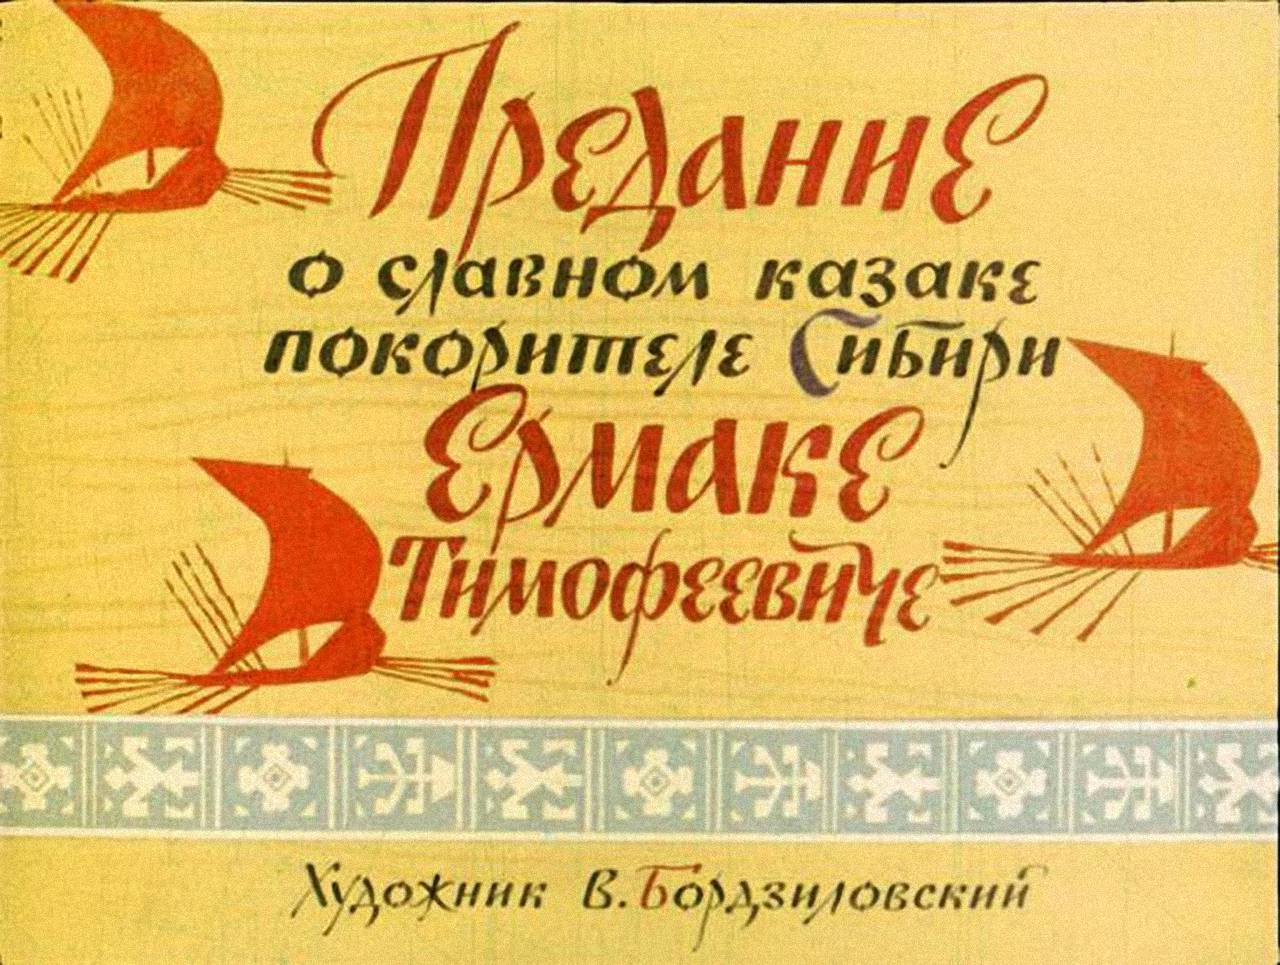 006_PREDANIE-O-SLAVNOM-KAZAKE-POKORITELE-SIBIRI-ERMAKE-TIMOFEEVICE.jpg